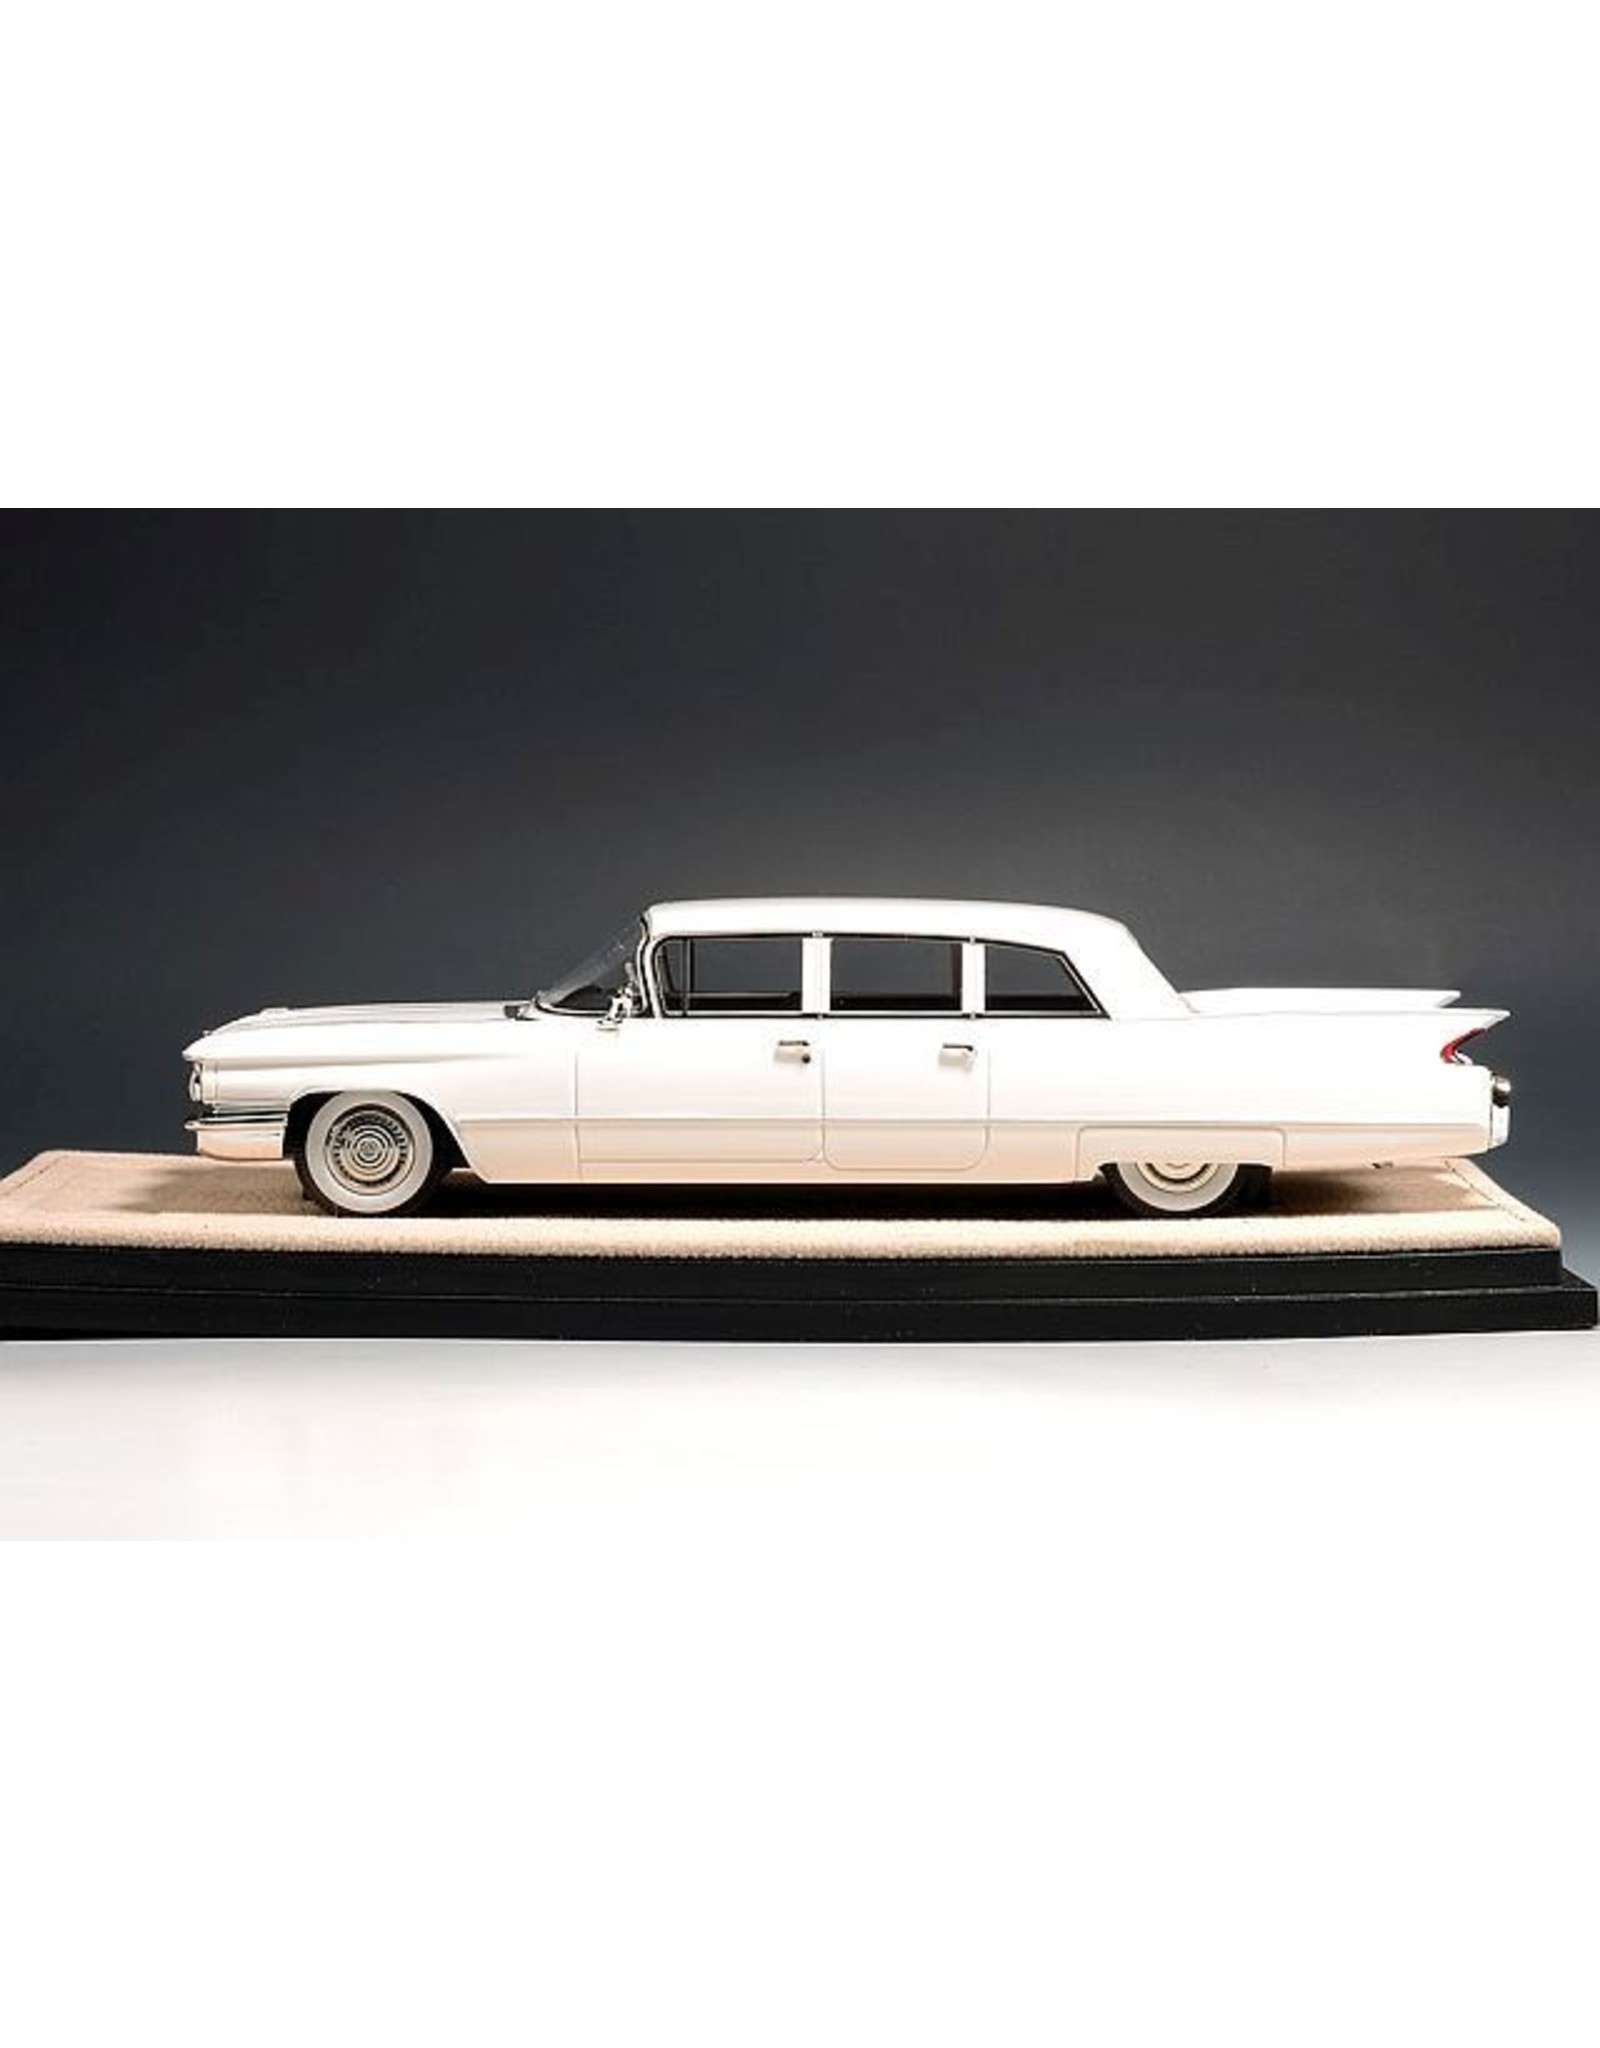 Cadillac(General Motors) Cadillac Fleetwood 75 Limousine(1960)White